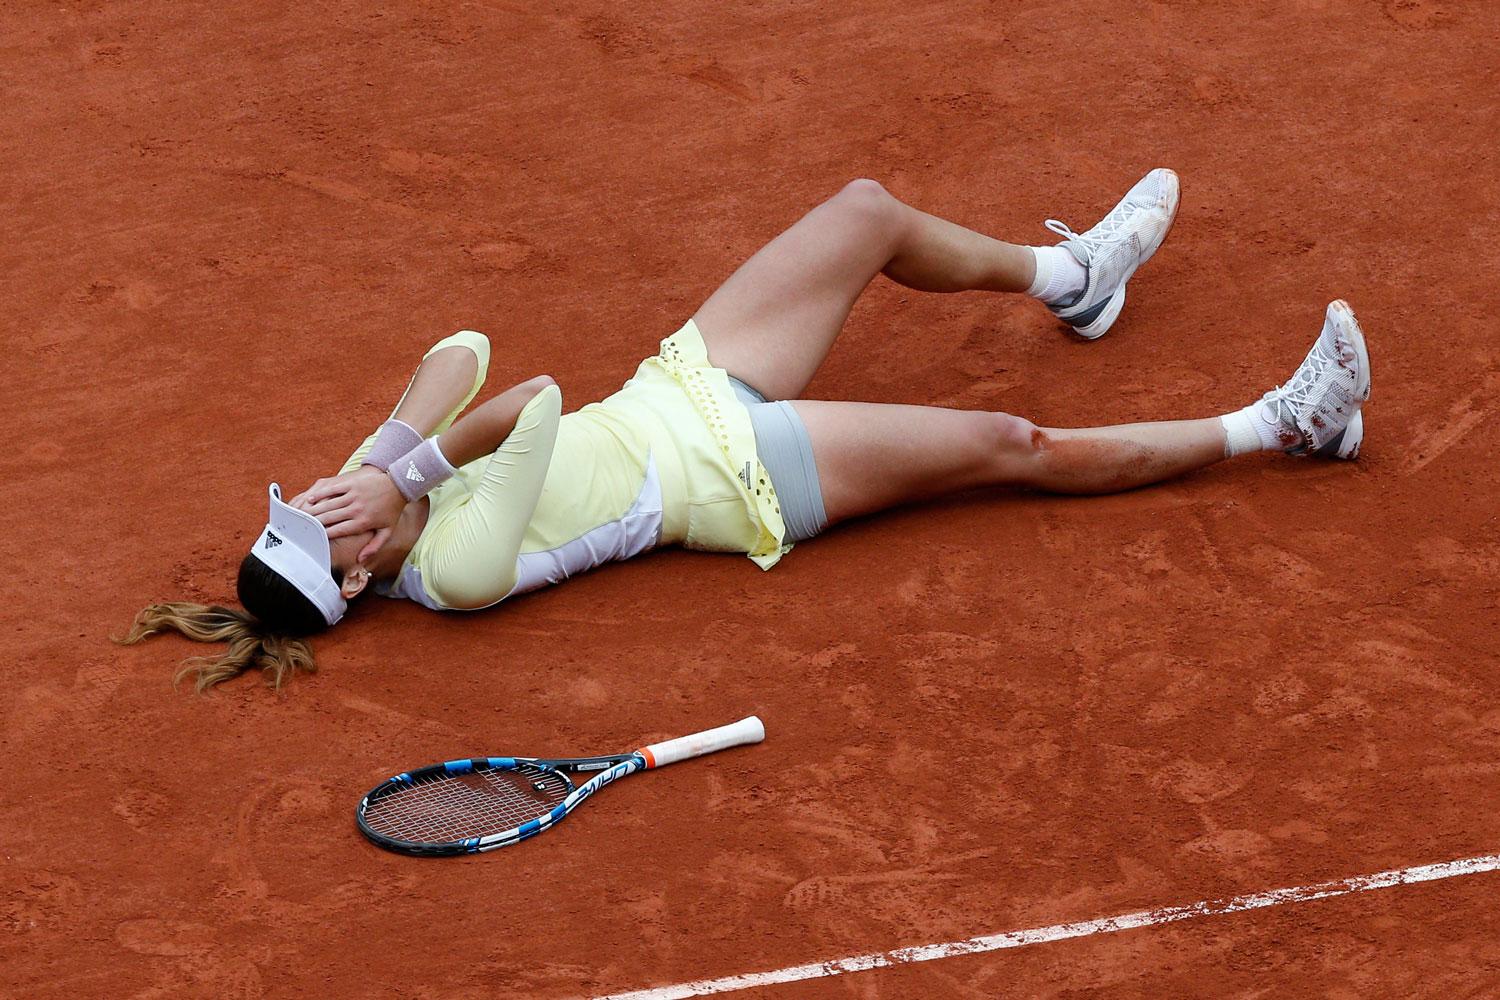 Garbiñe Muguruza vann finalen mot Serena Williams i två raka set.